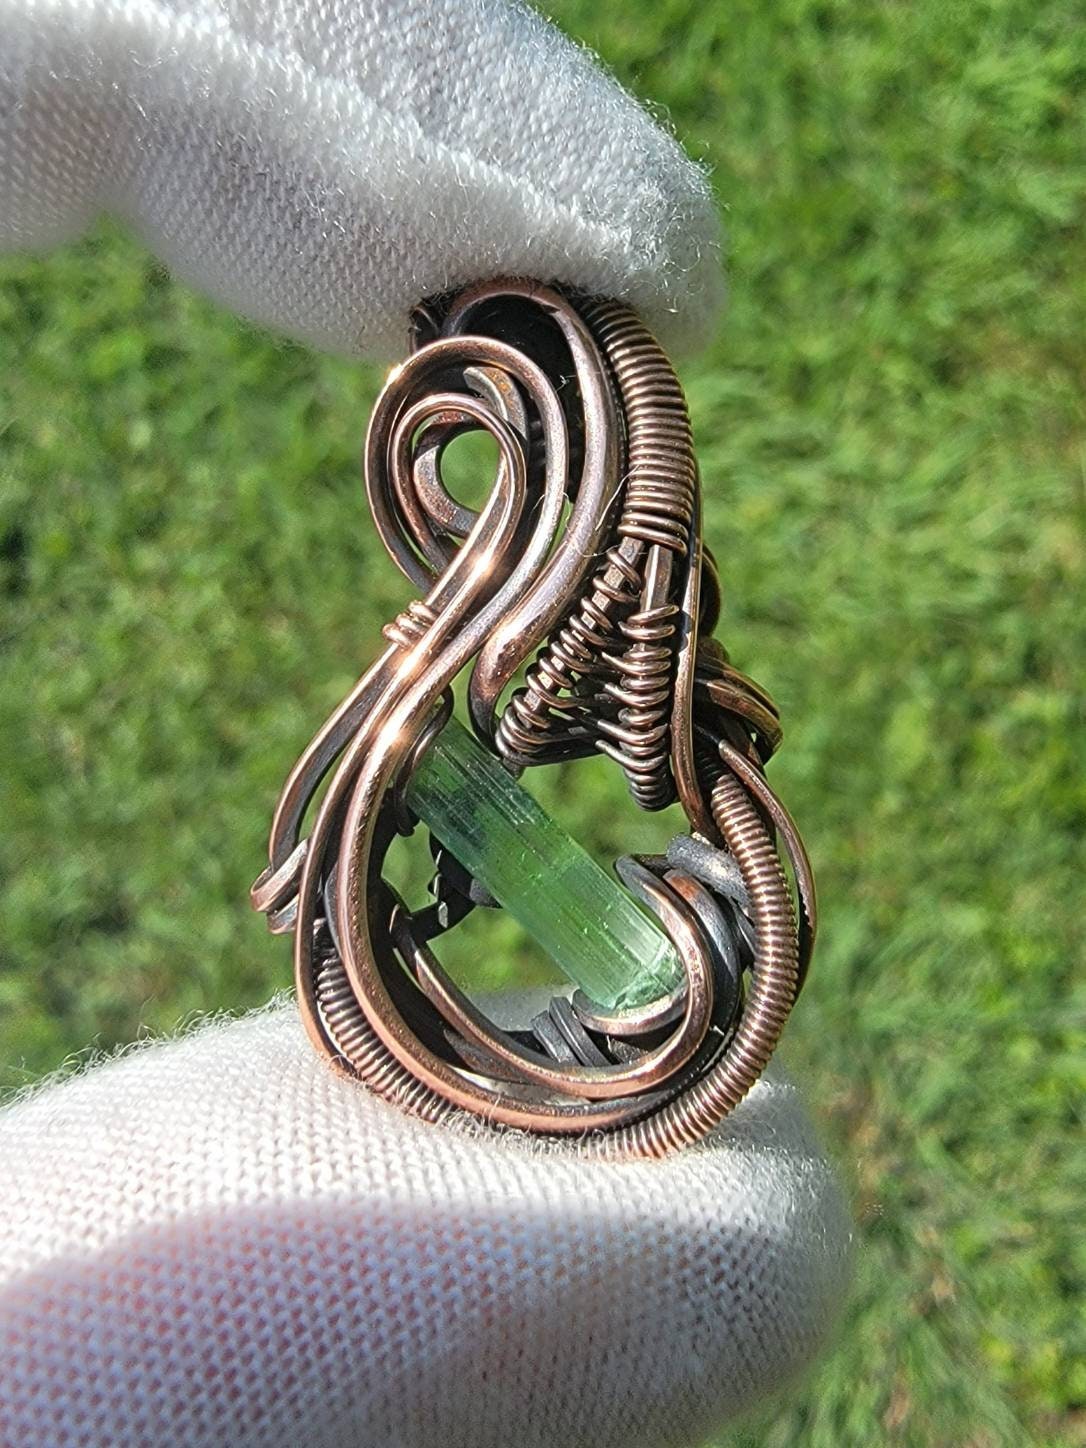 Green Tourmaline - Coil & Flow - Wire Wrap Pendant - Oxidized Copper